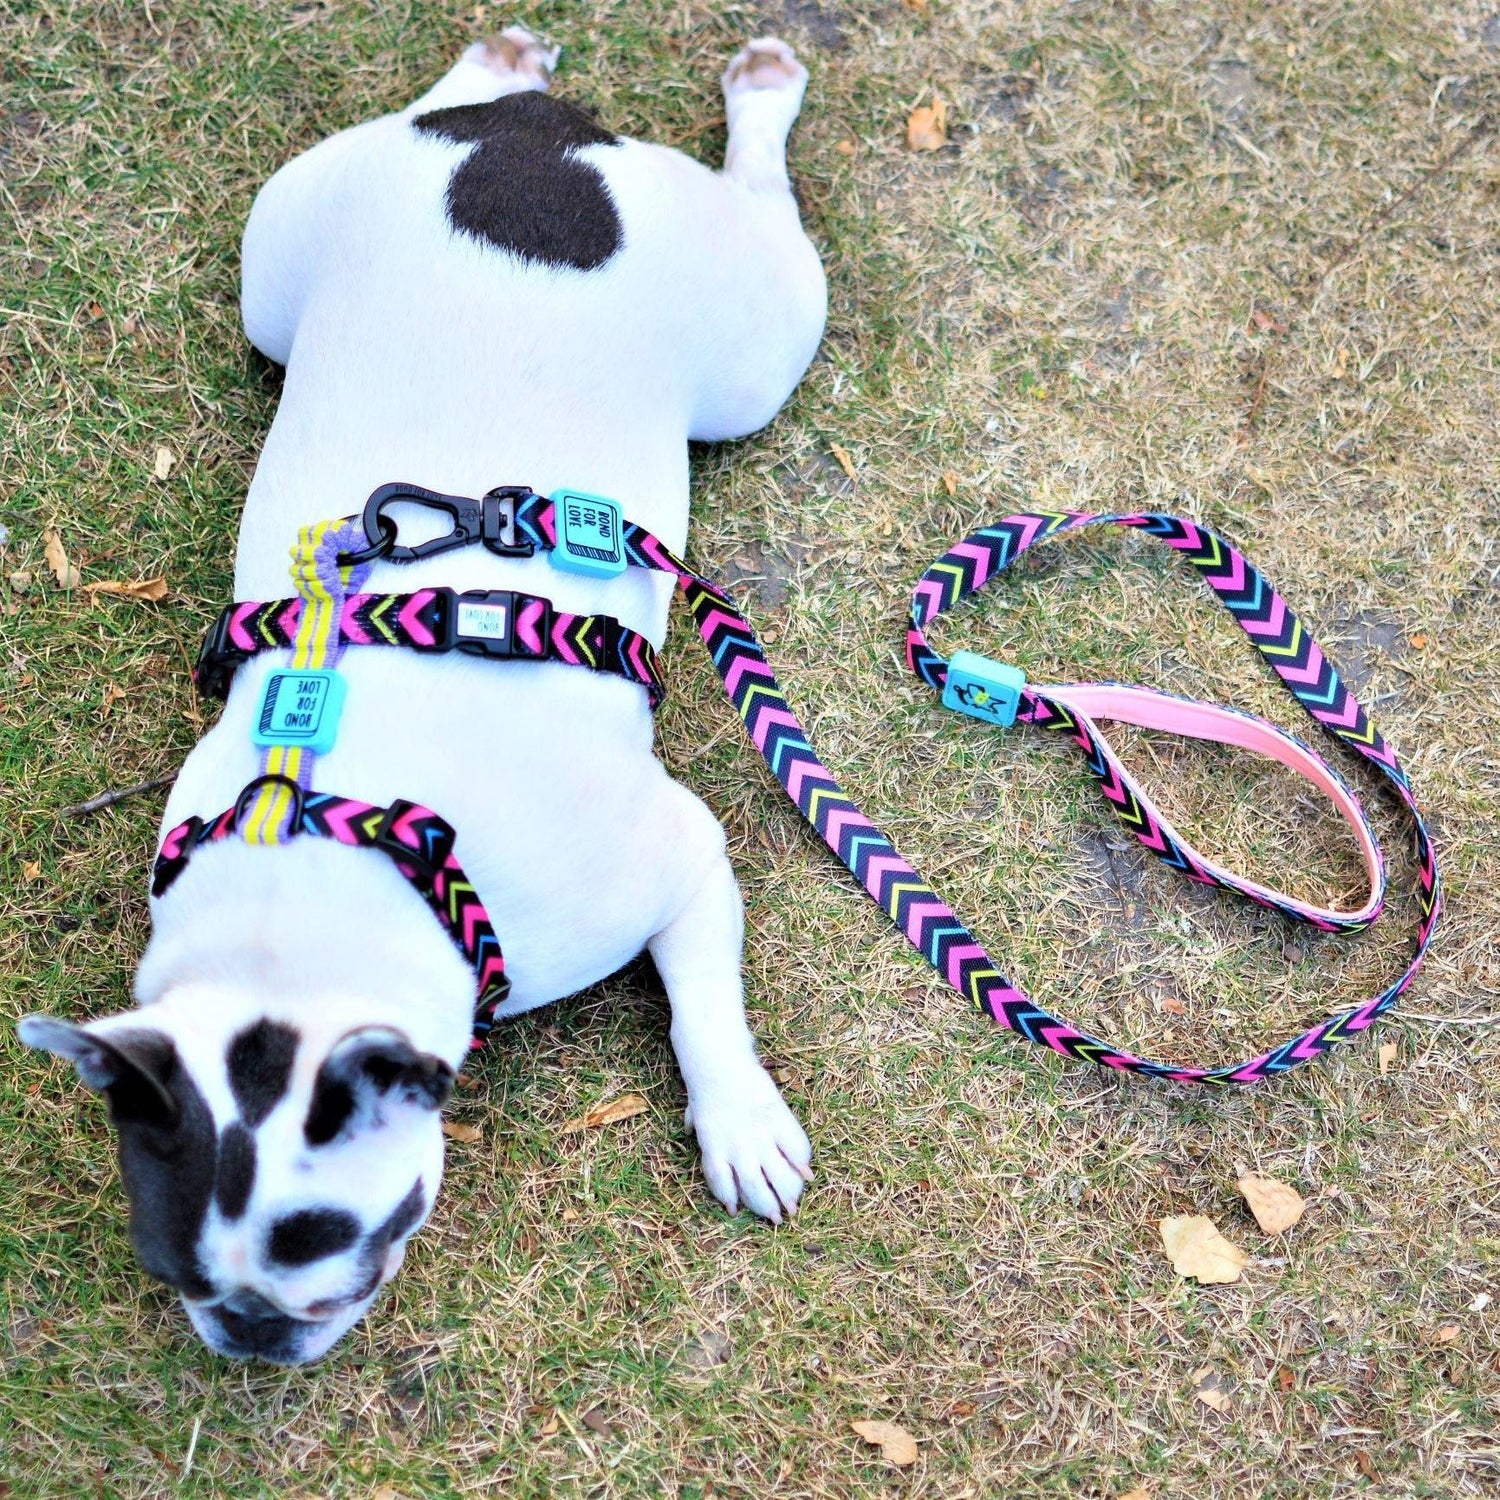 Adjustable Dog Strap Harness - Neon